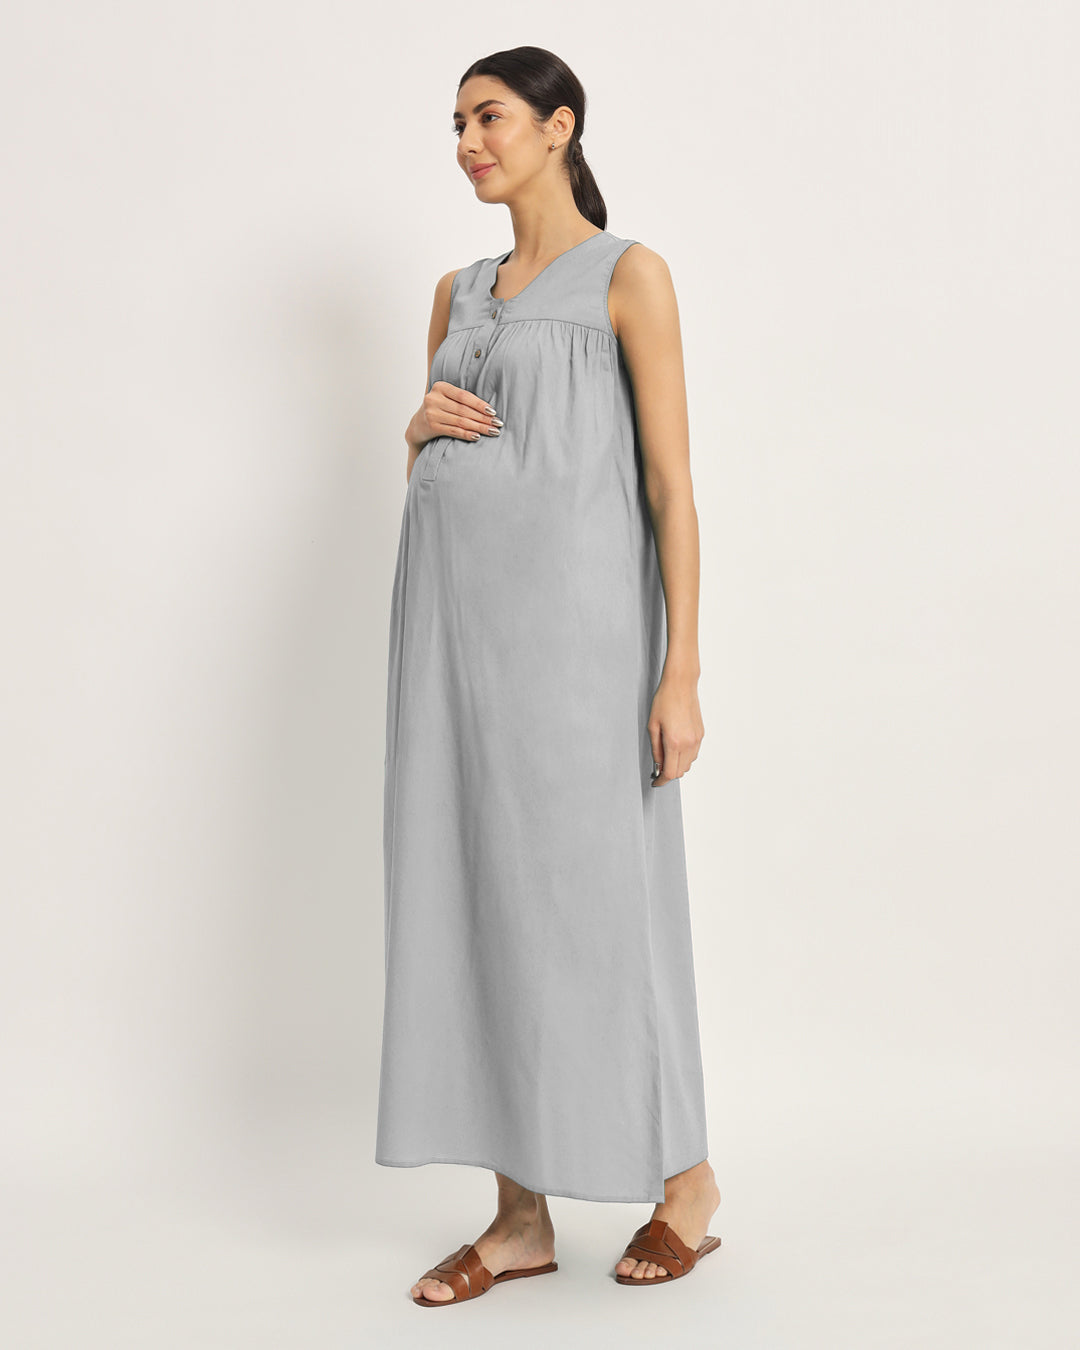 Iced Grey Mommylicious Maternity & Nursing Dress